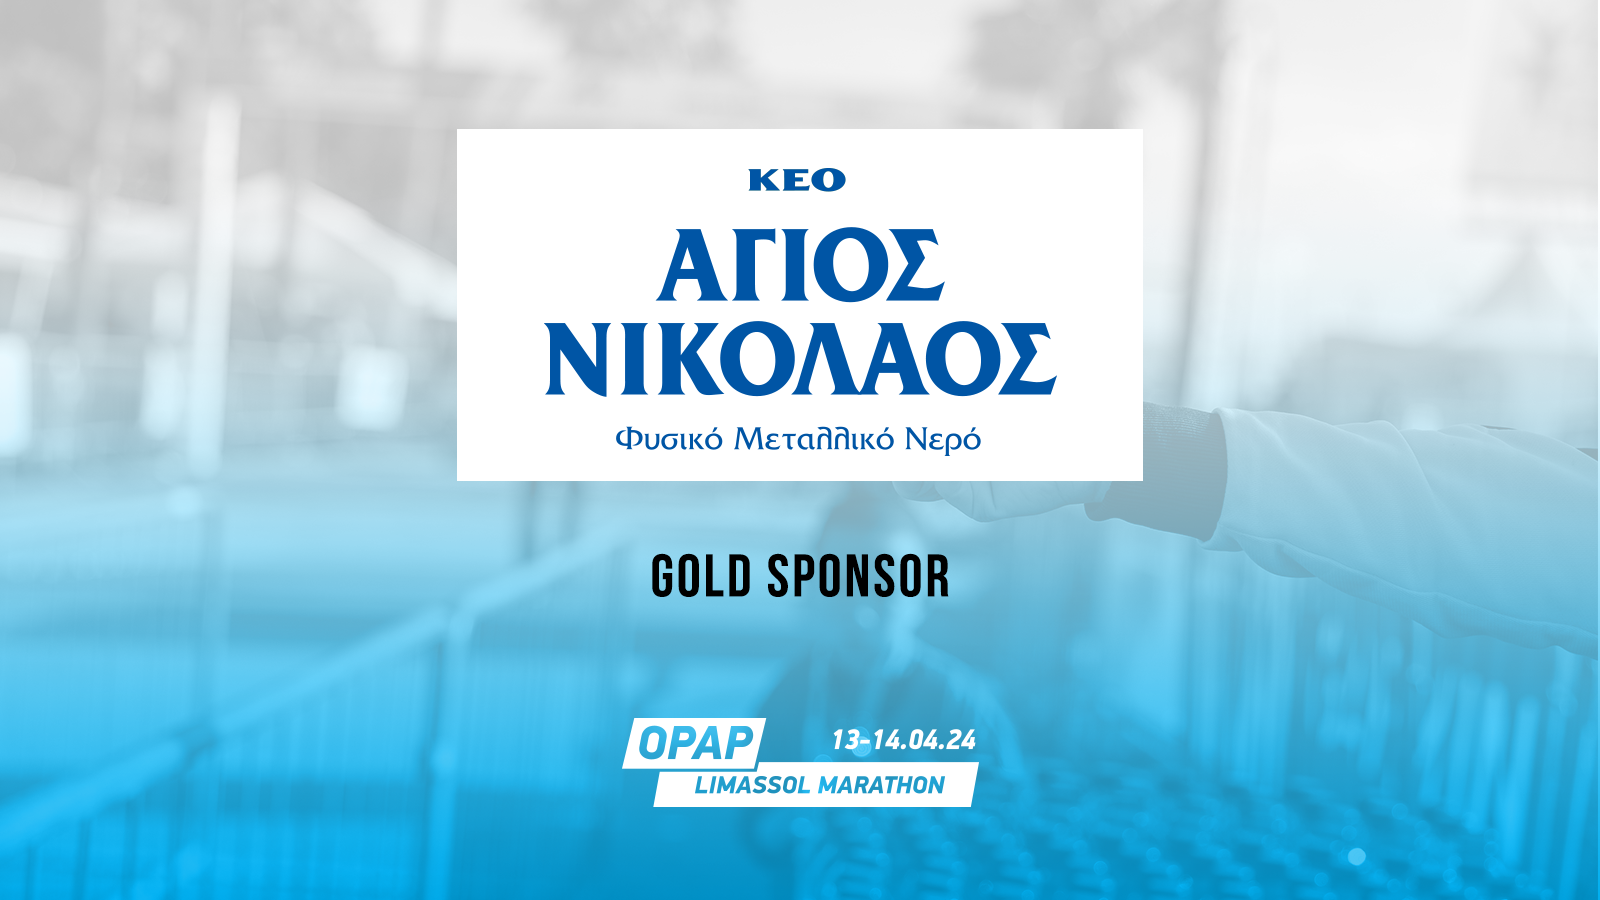 sponsors-announcement-press-releases-AgiosNikolaos